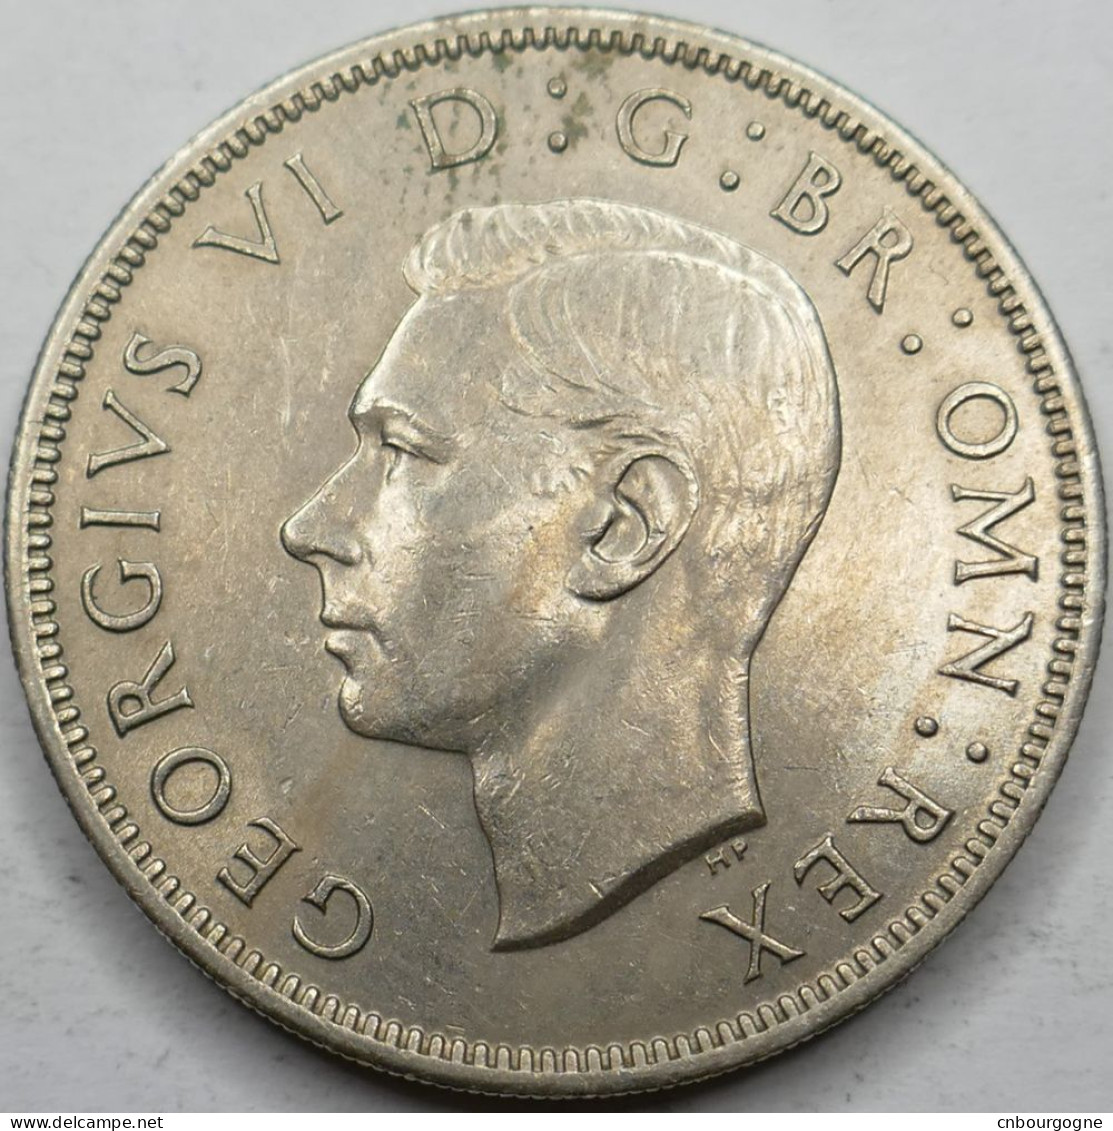 Royaume-Uni - George VI - Two Shillings 1951 - SUP/AU55 - Mon6203 - J. 1 Florin / 2 Shillings